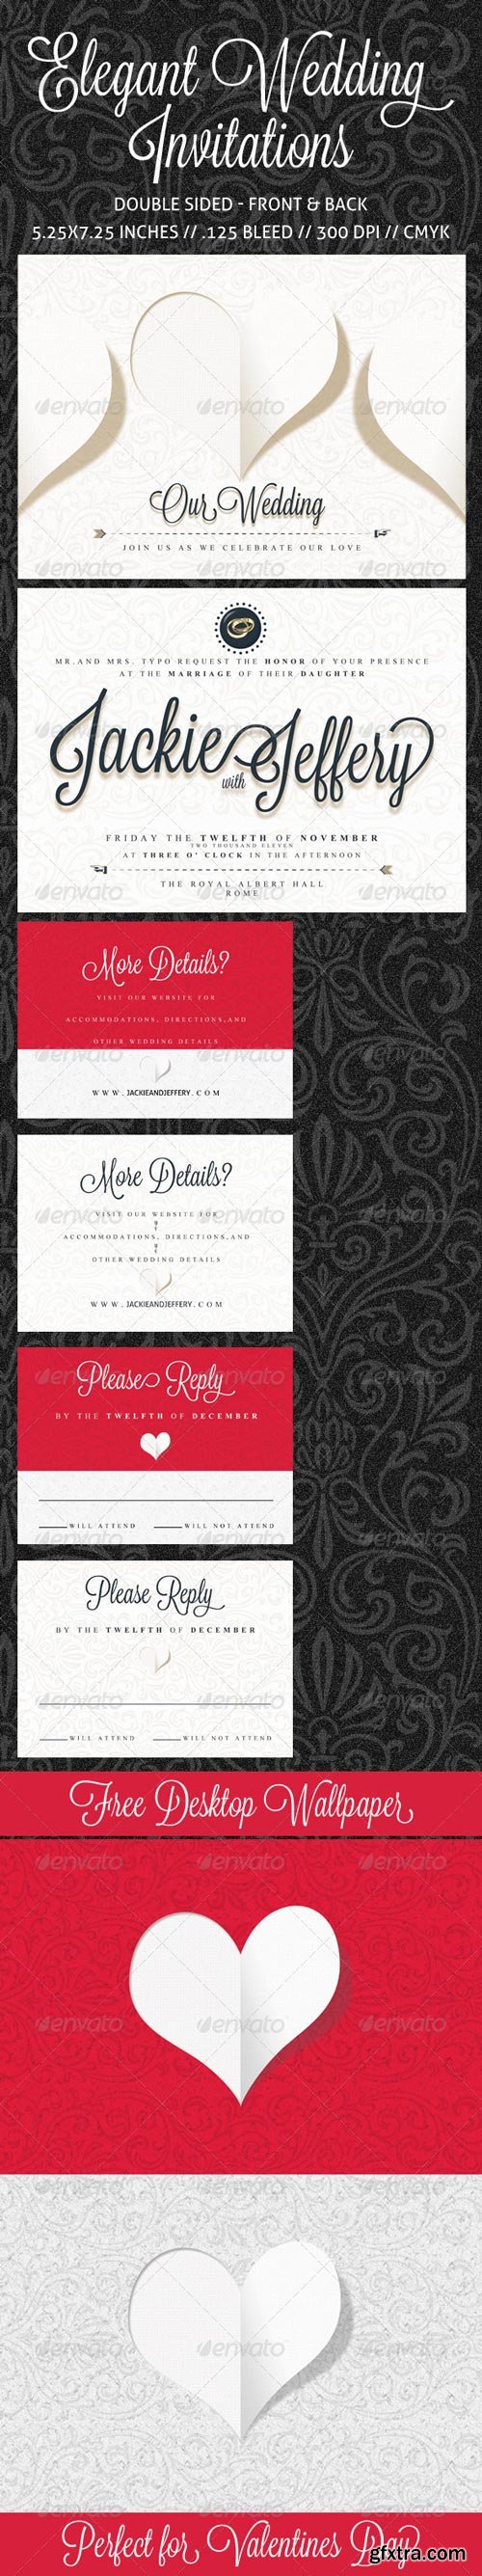 GraphicRiver - Elegant Wedding Invitation, RSVP and Info Card - 1150570